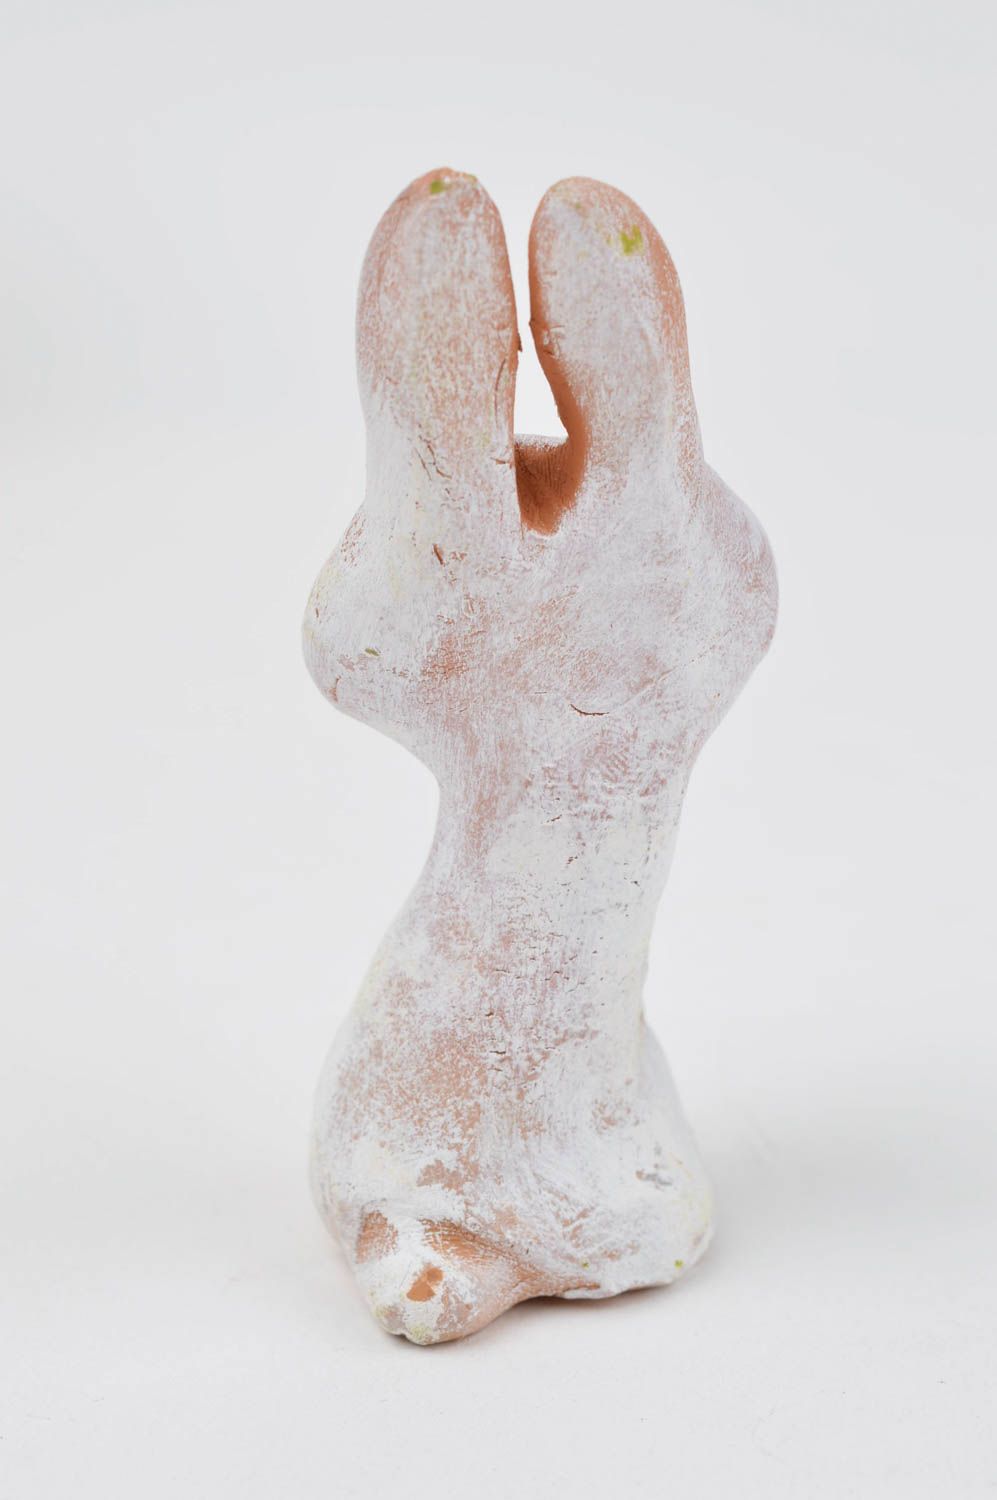 Handmade cute figurine stylish ceramic statuette unusual home decor ideas photo 4